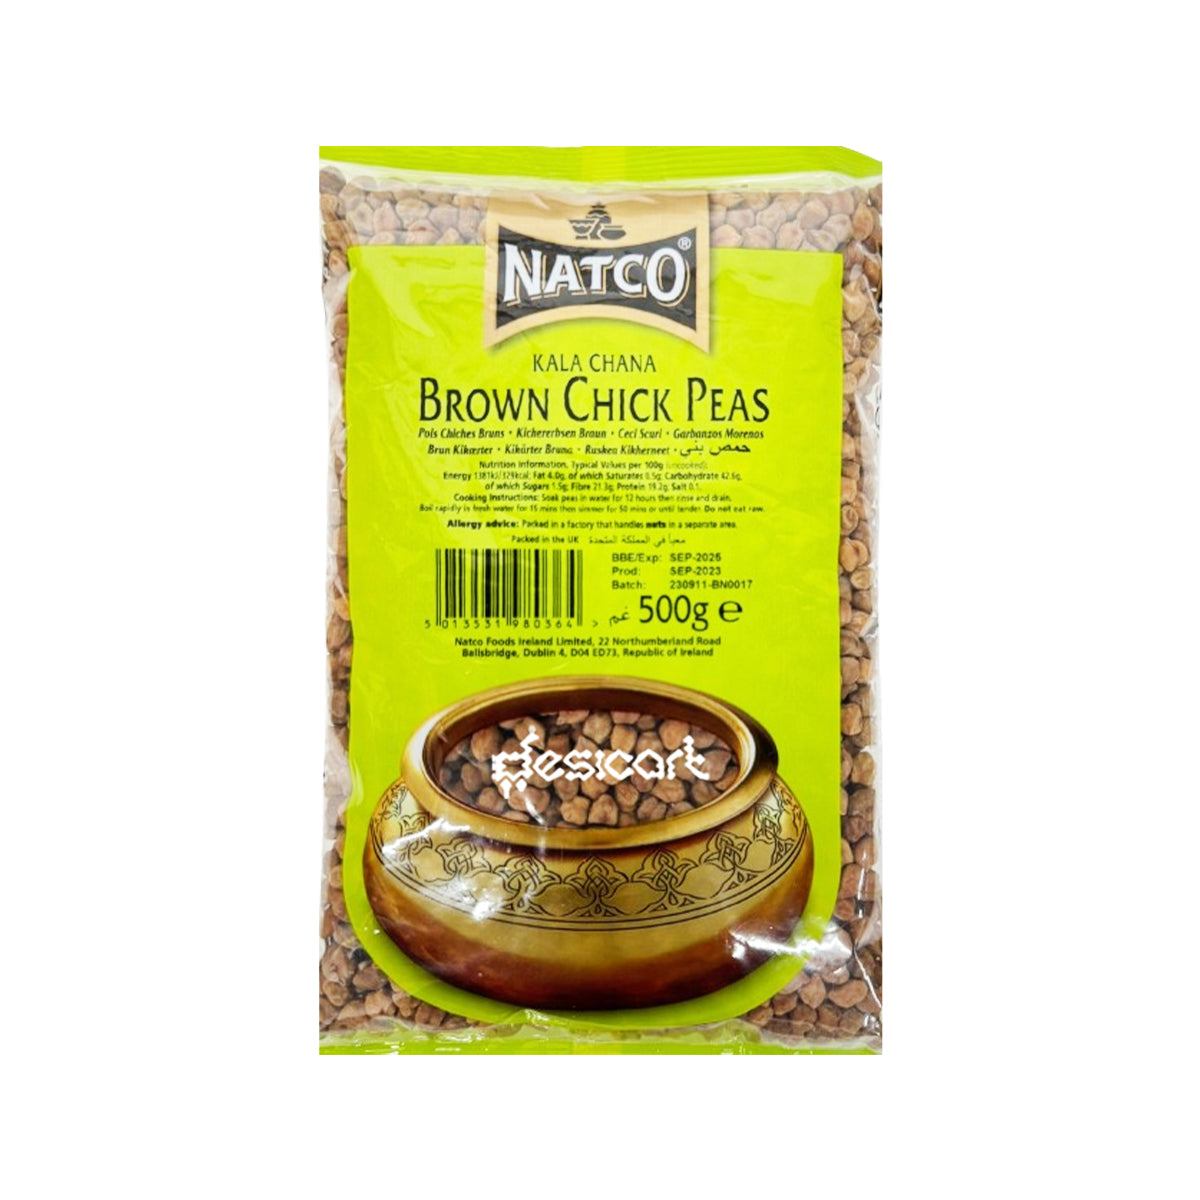 NATCO BROWN CHICK PEAS 500G